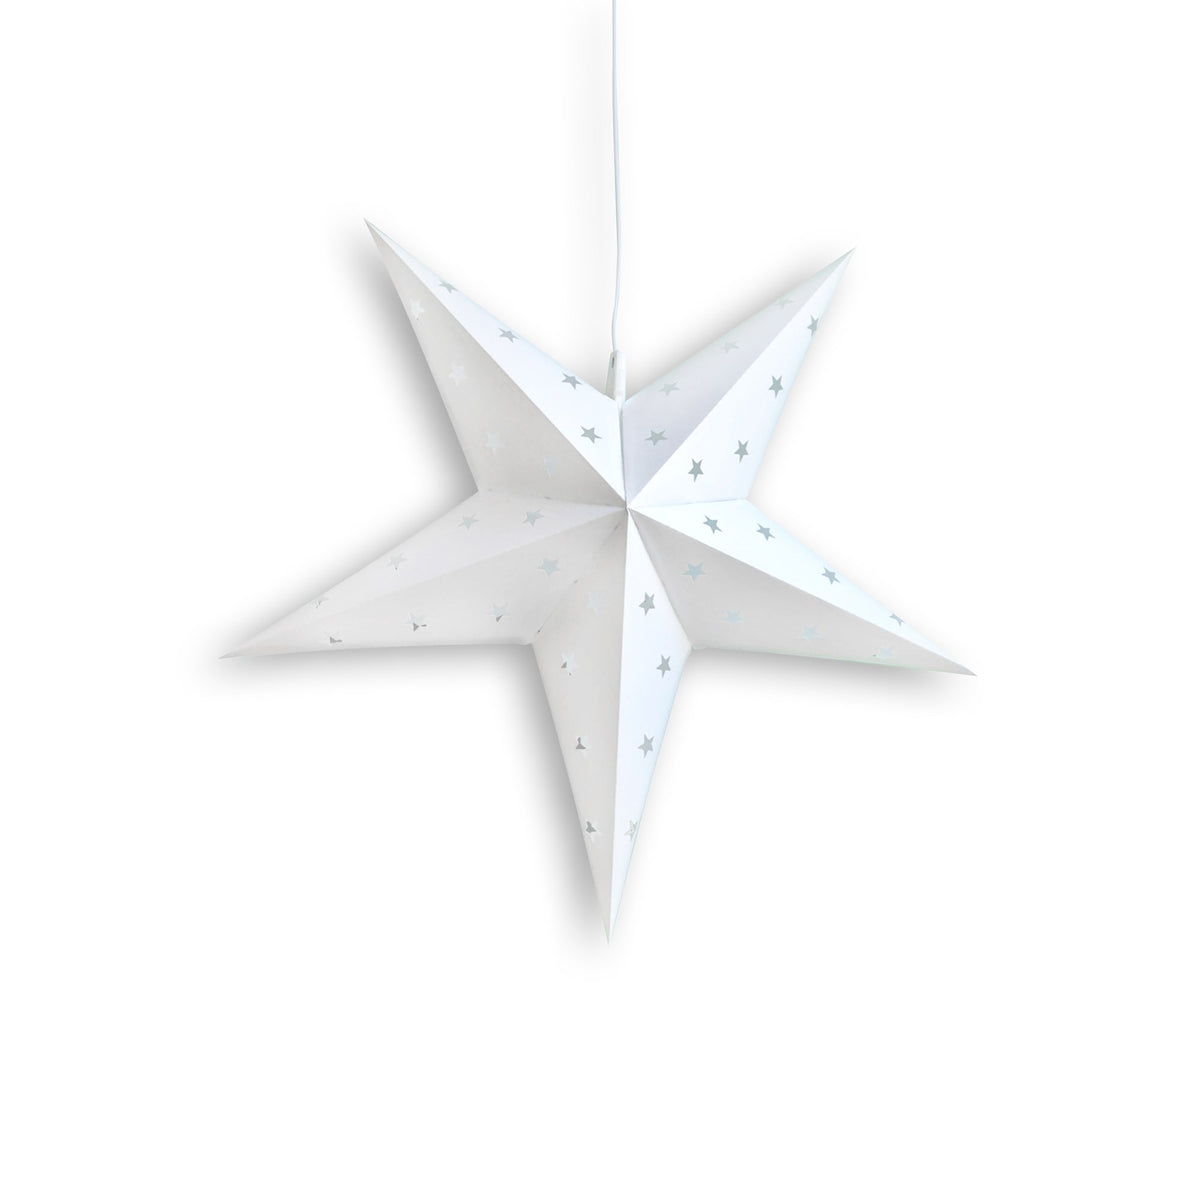 15" White Weatherproof Star Lantern Lamp, Hanging Decoration (Shade Only)